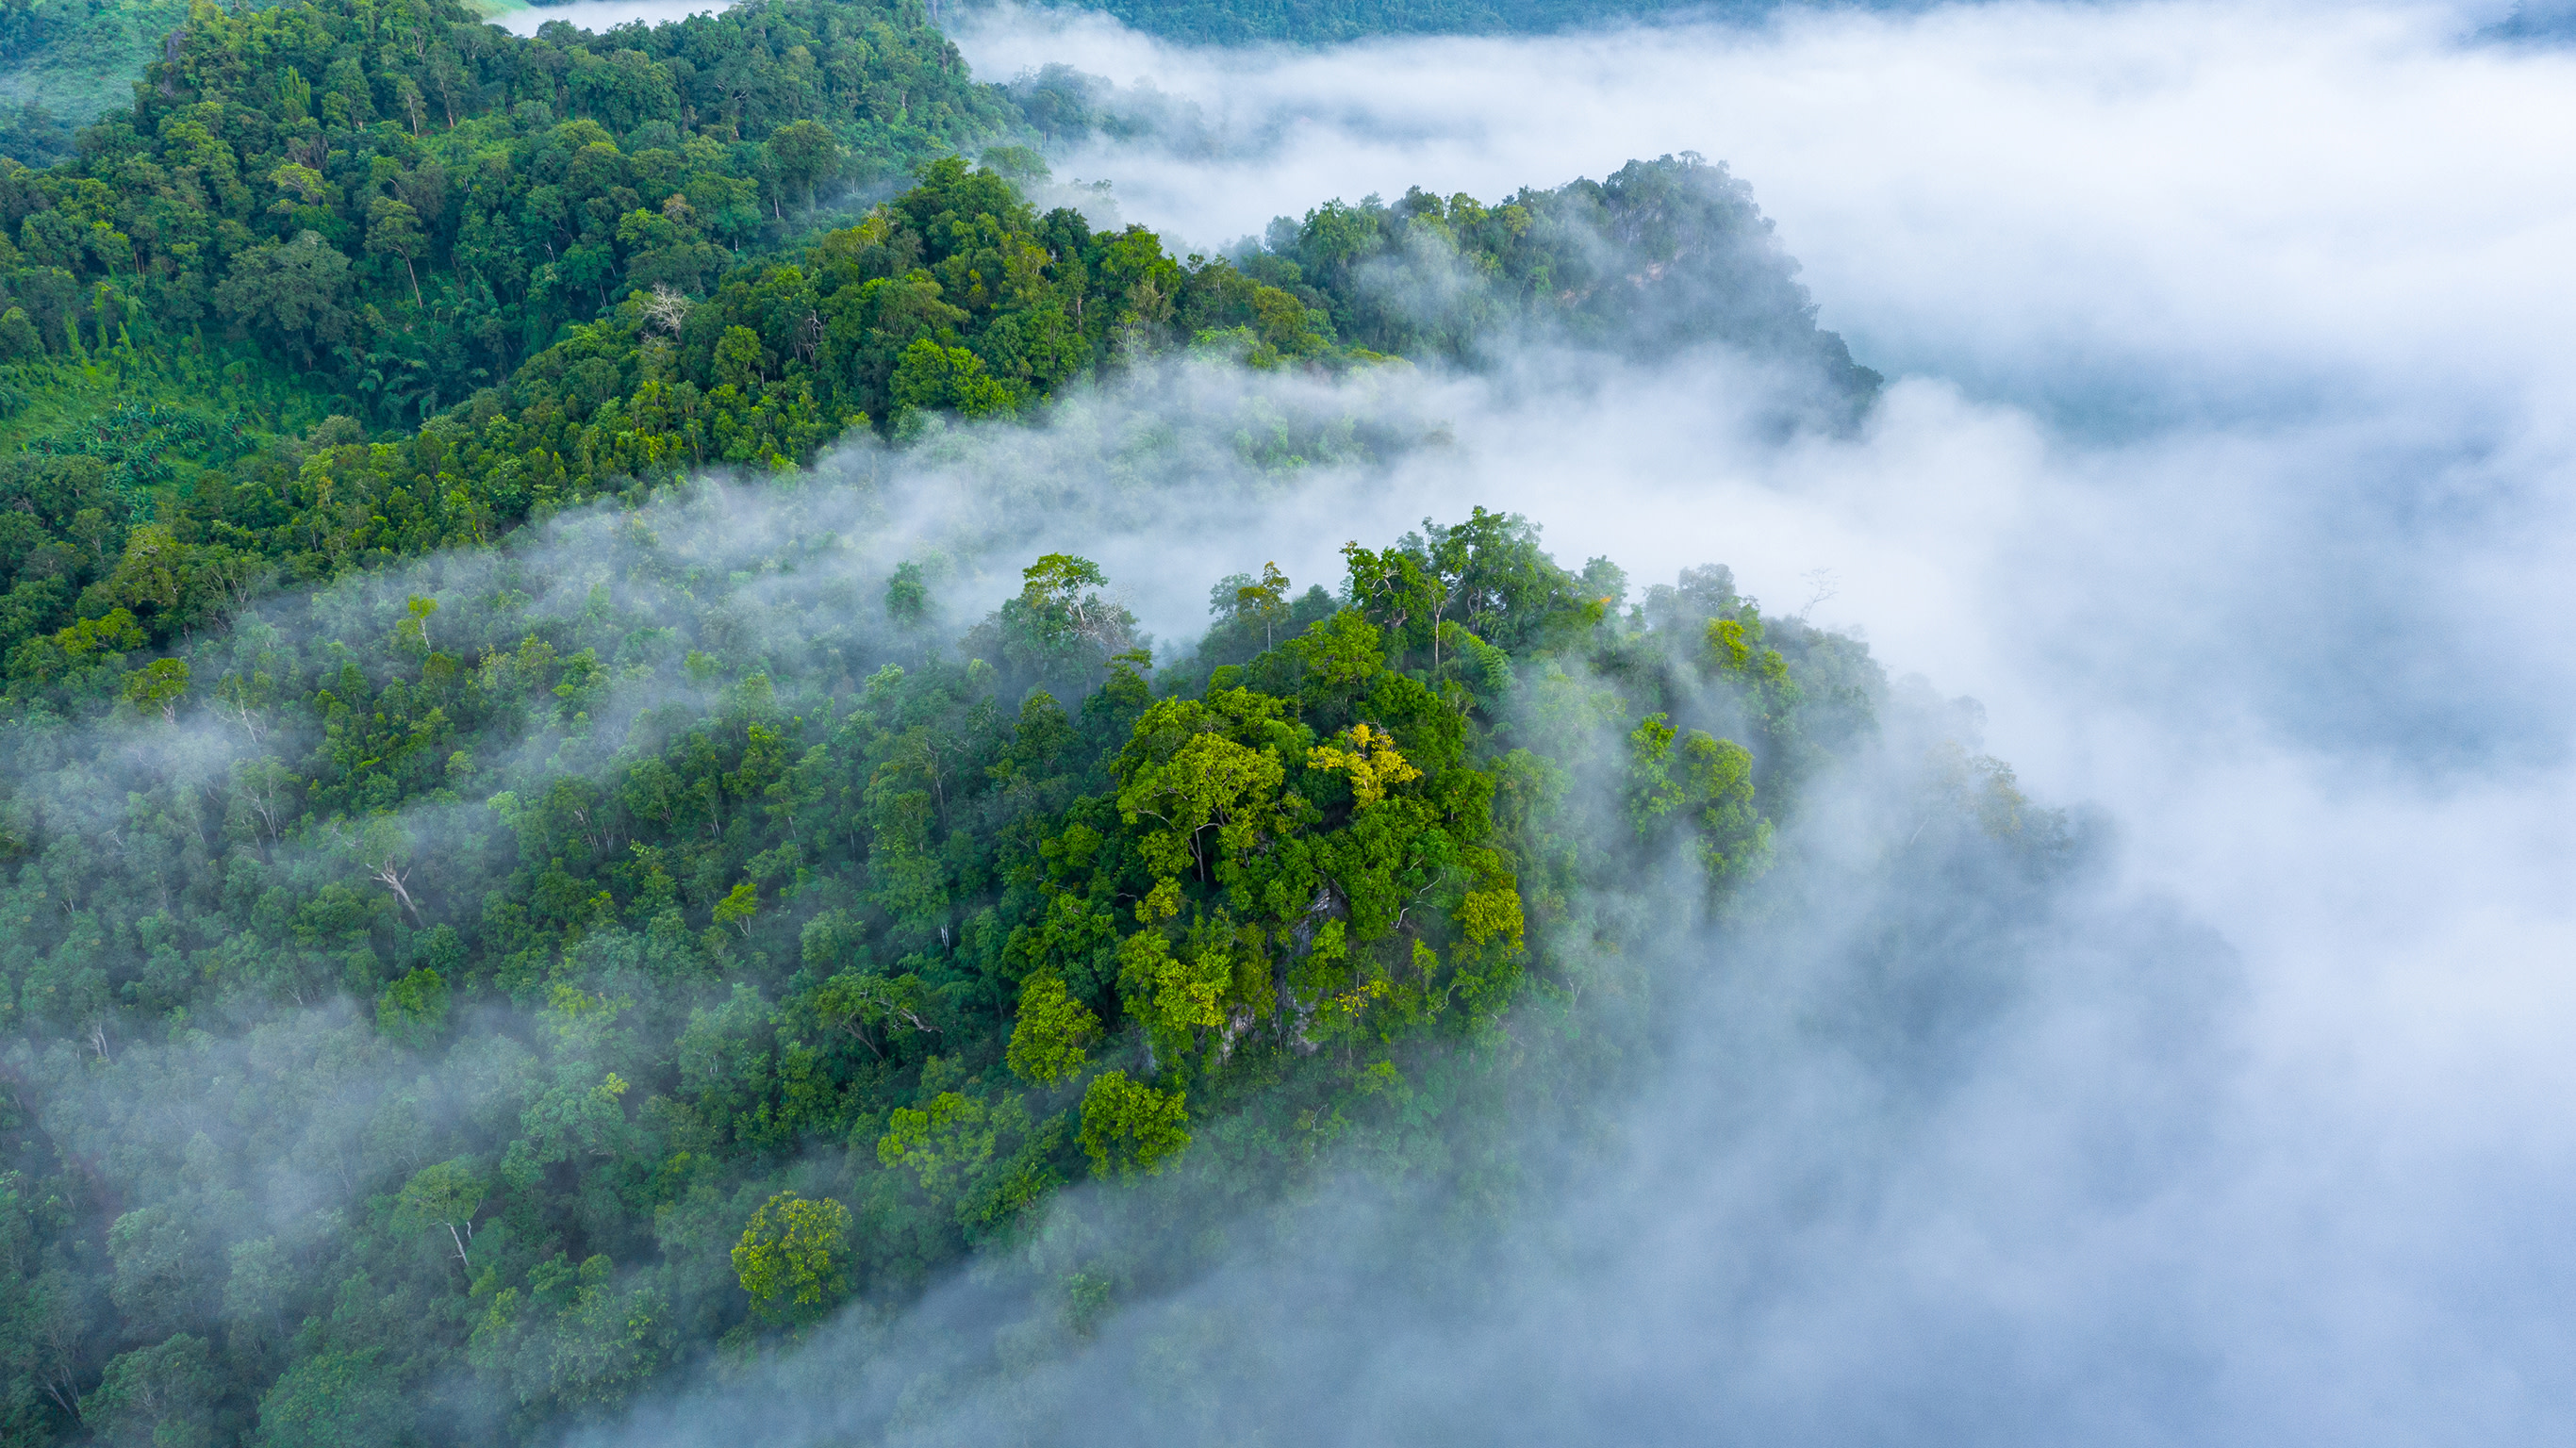 Rainforest, unkown location 1 - Shutterstock - edit